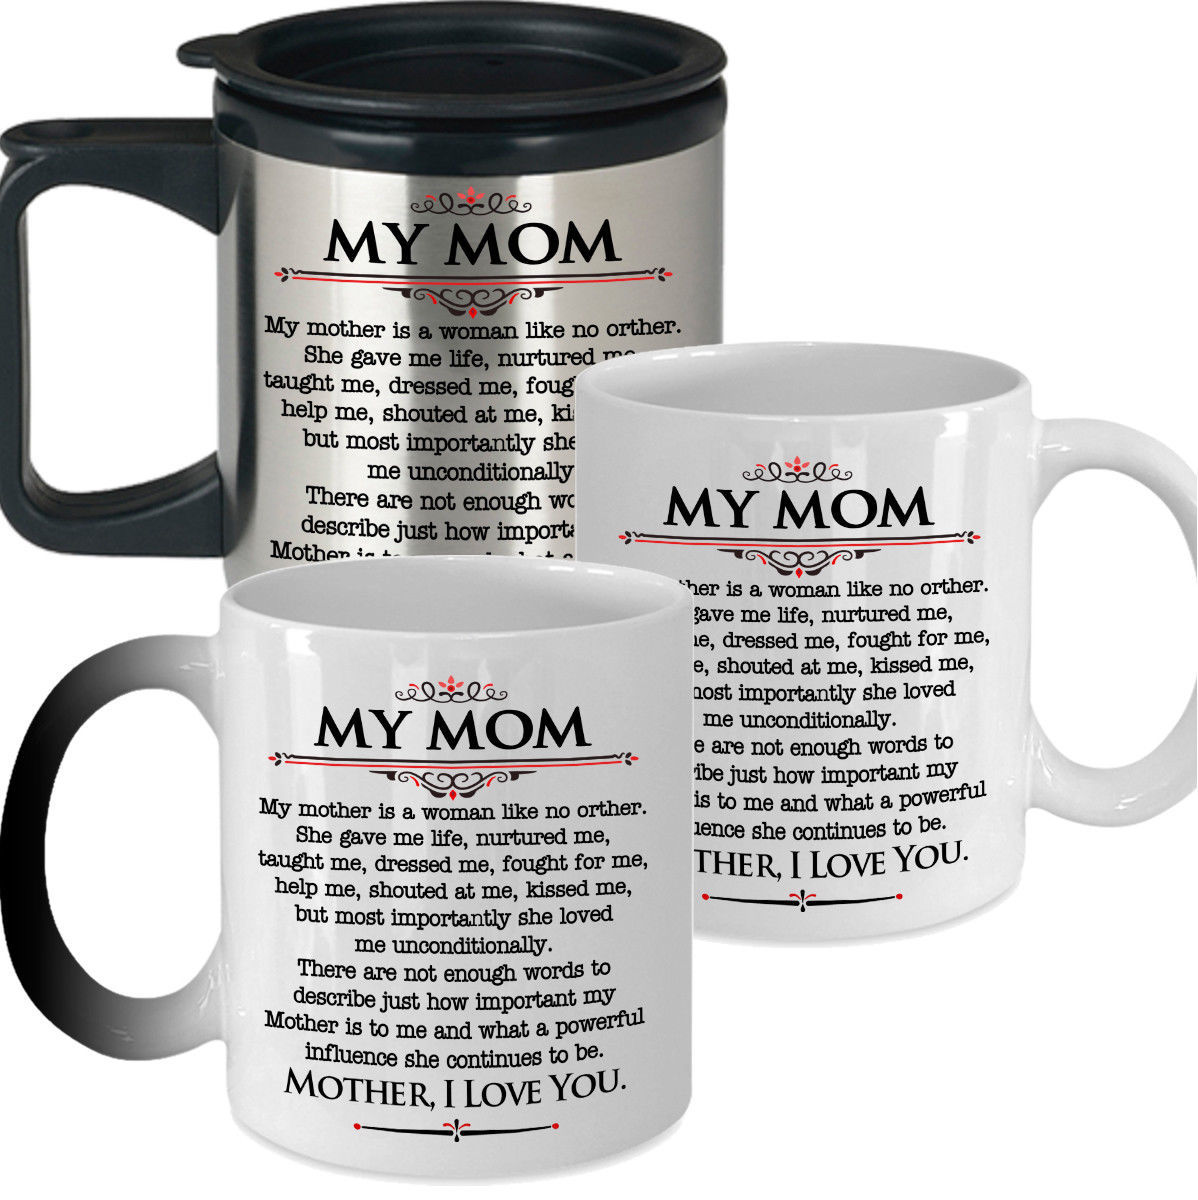 I Love That You’re My Mom Ceramic Coffee Mug